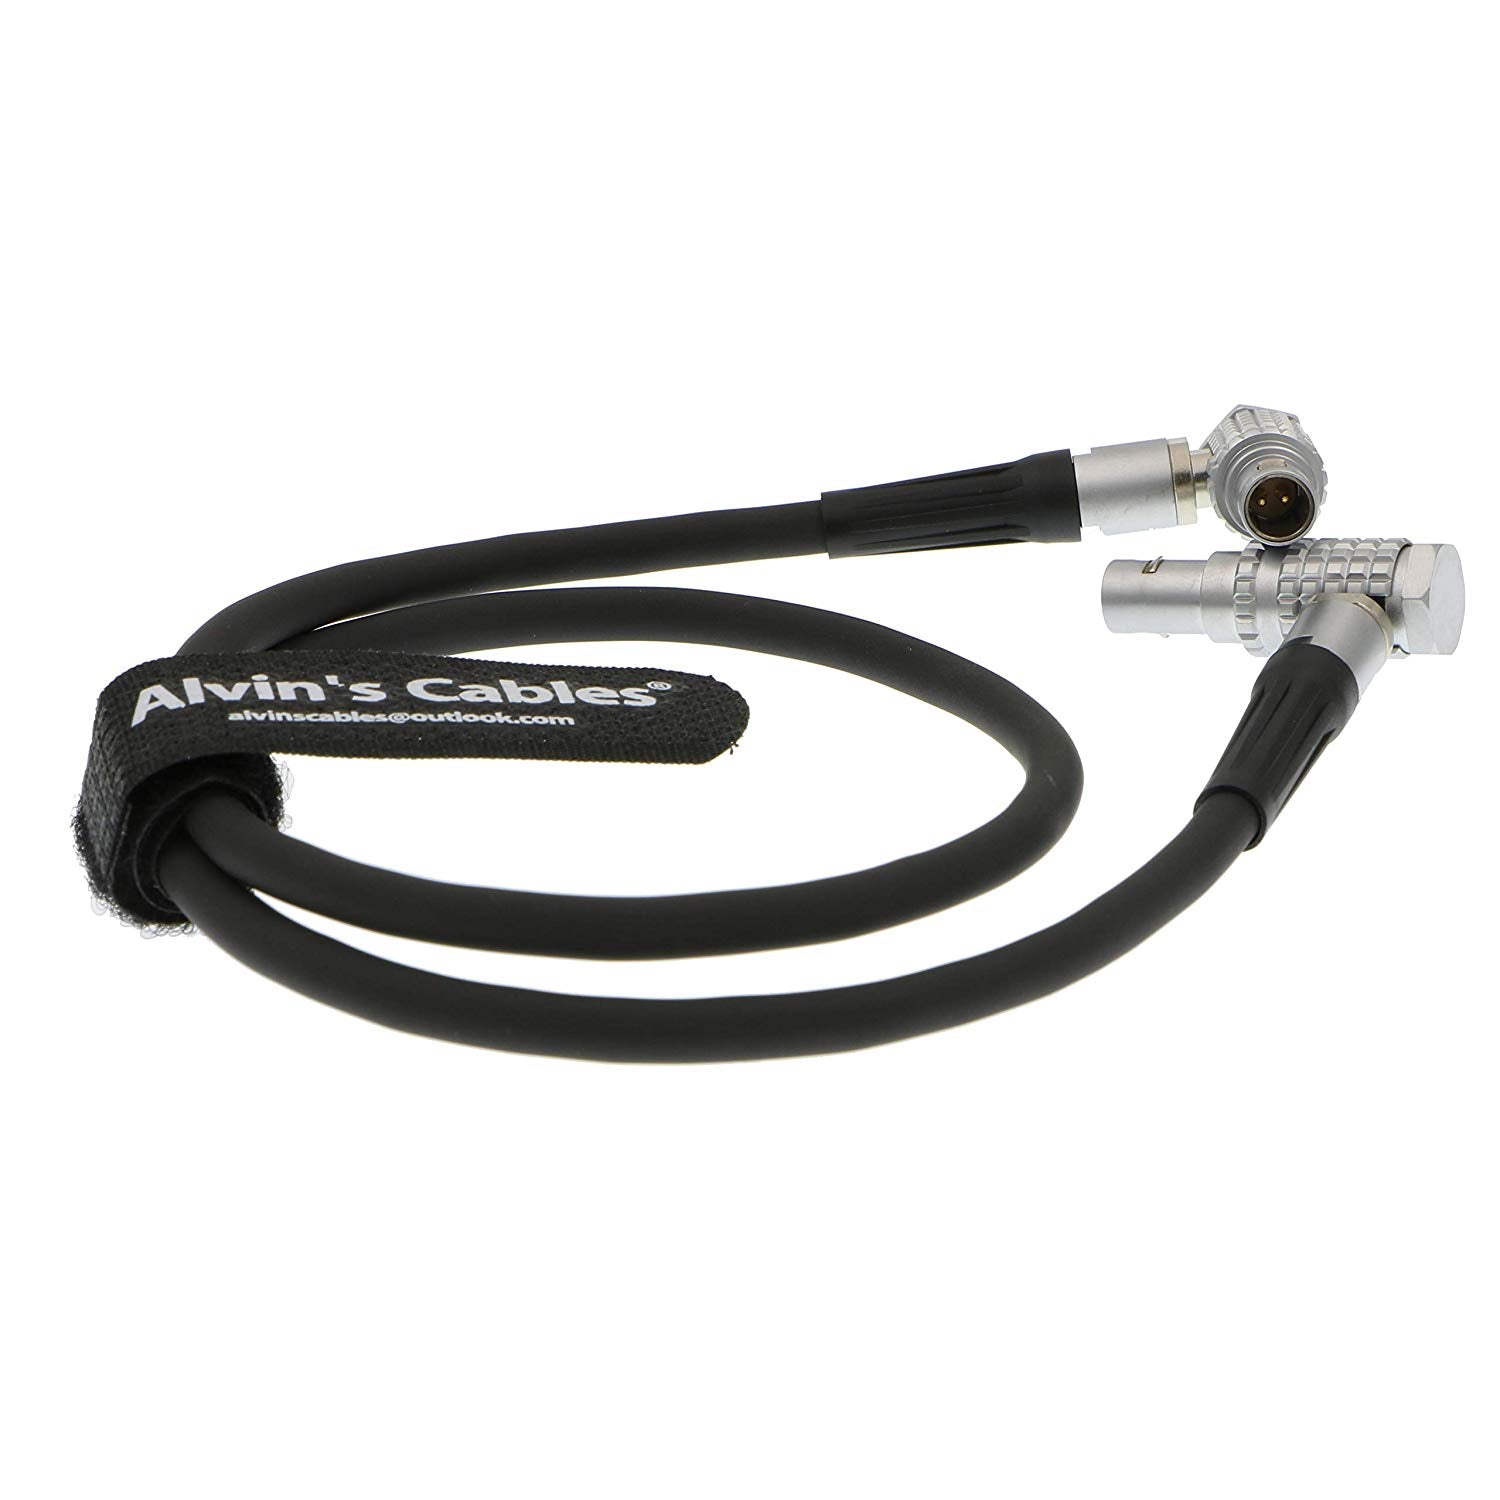 Alvin's Cables Teradek Bond ARRI Alexa Kamera Stromkabel 2 Pin Stecker rechtwinklig auf 2 Pin